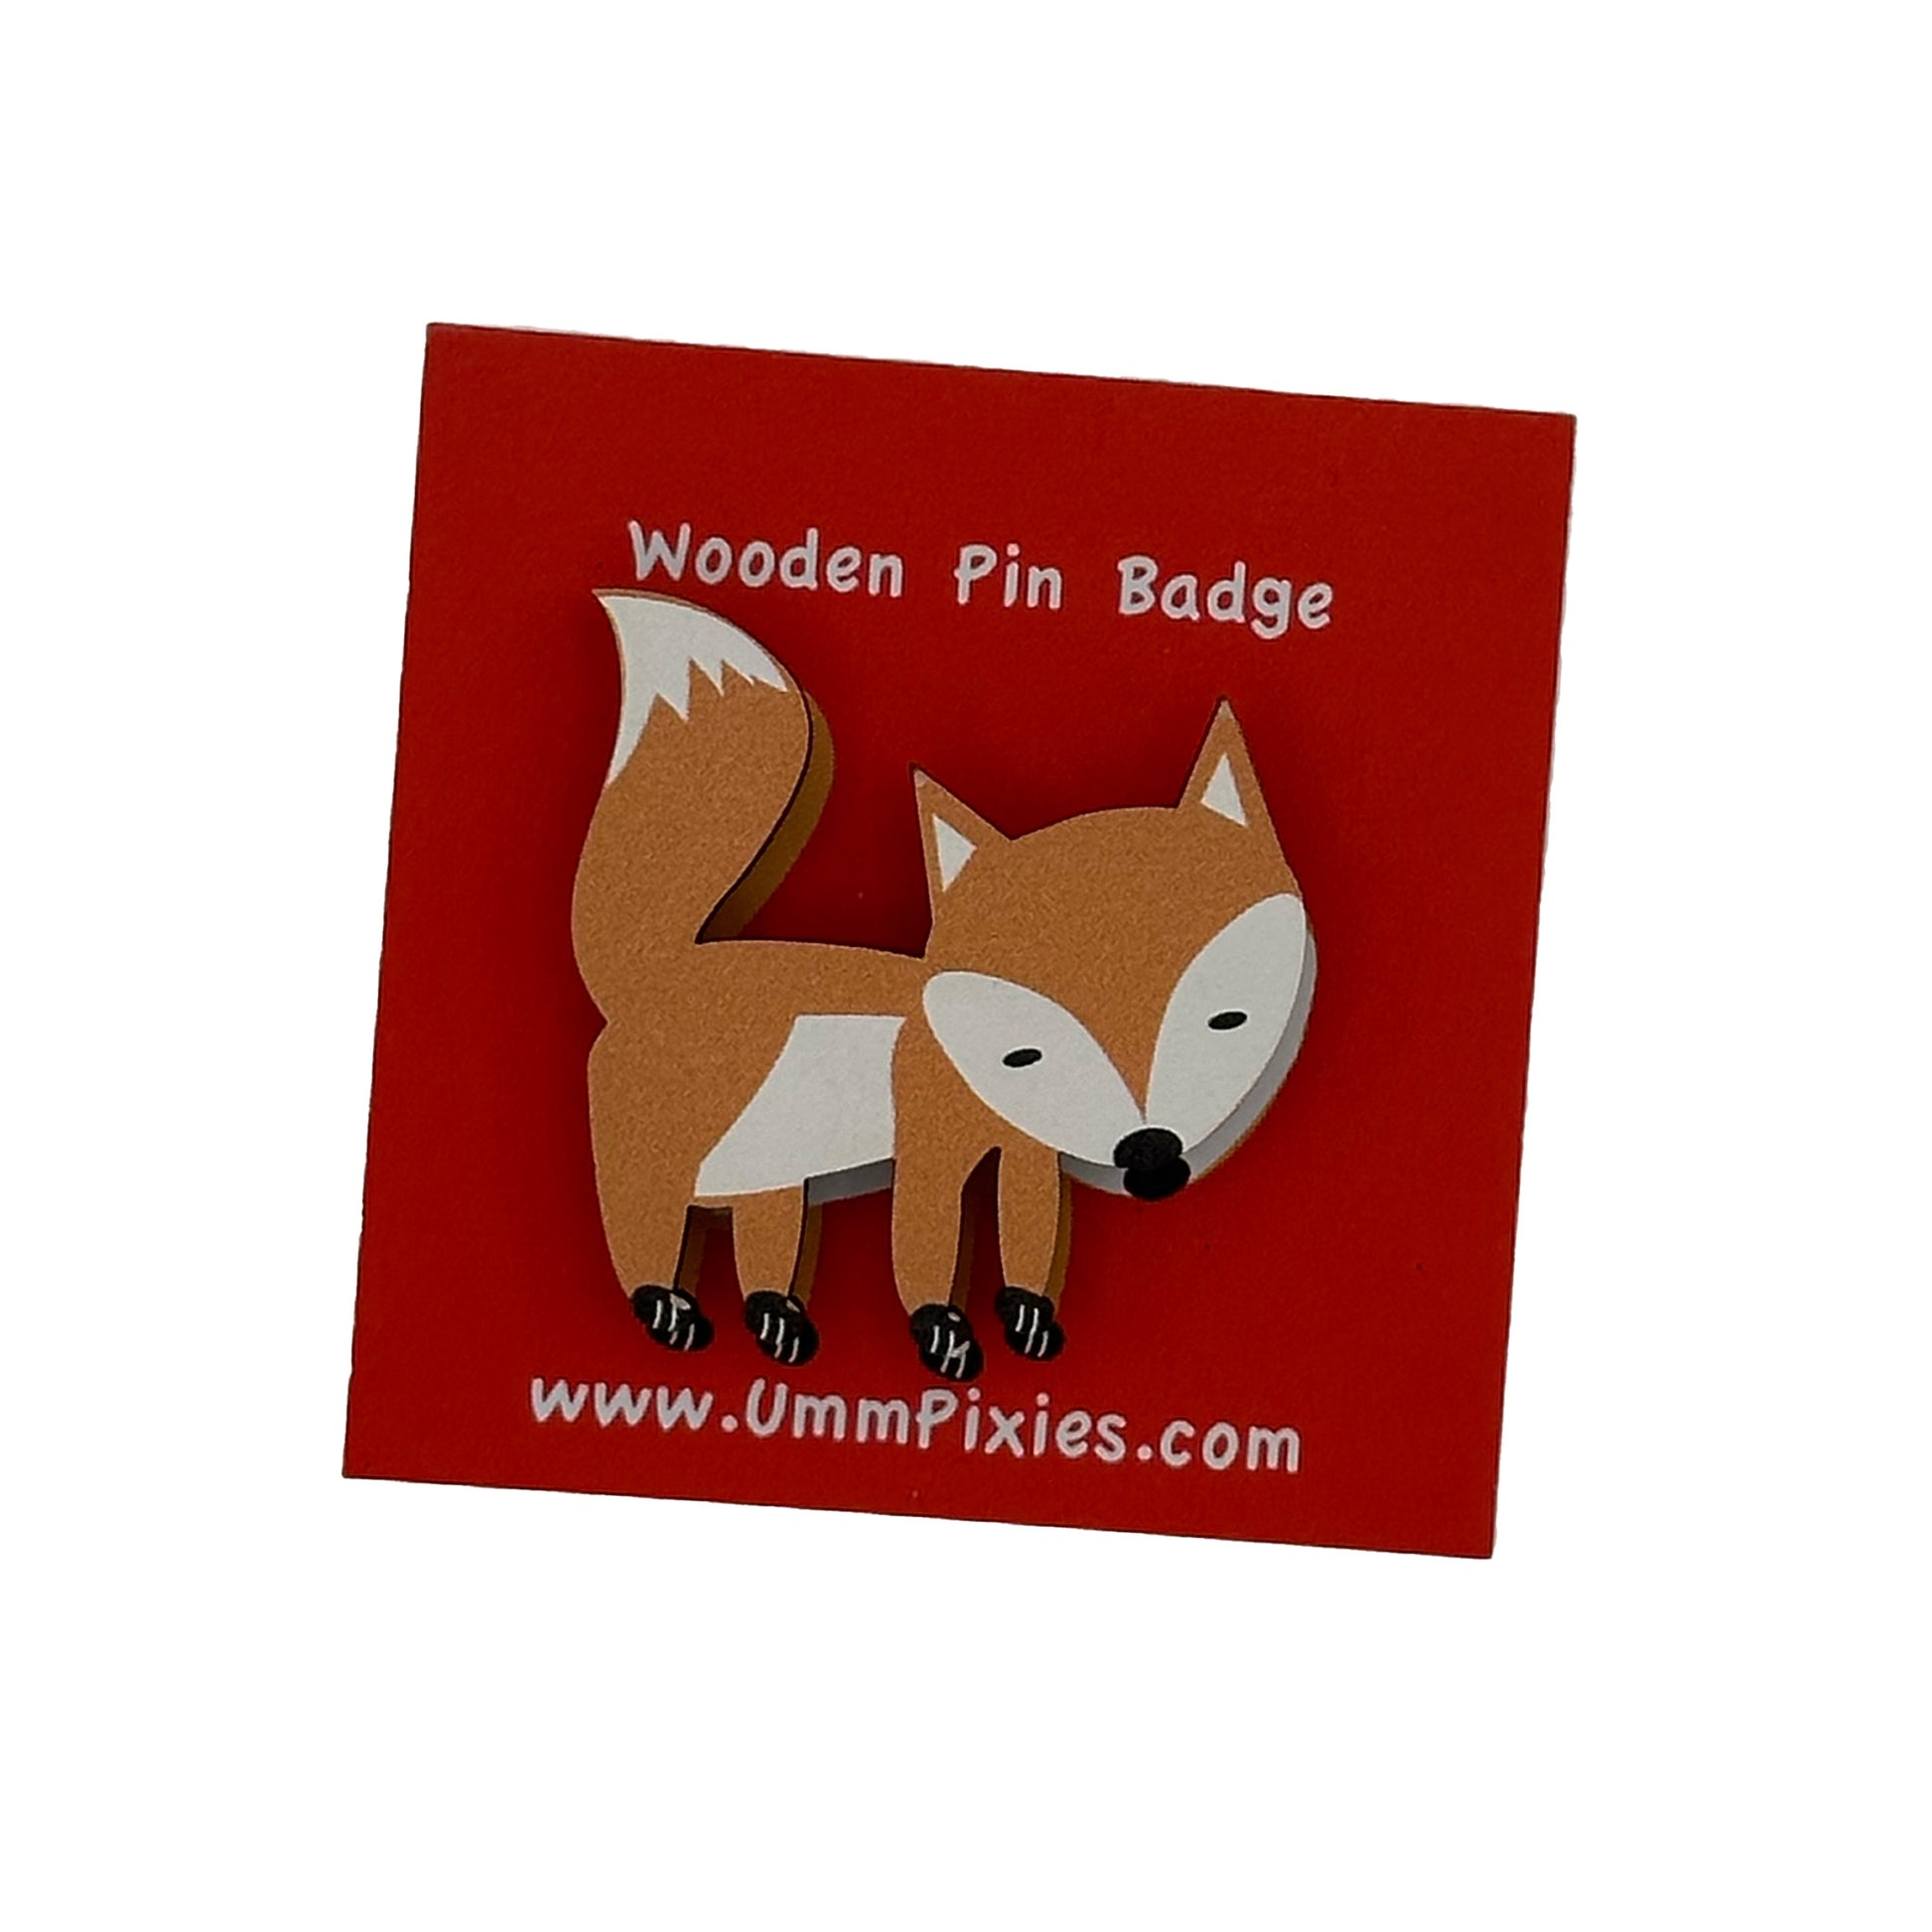 Walking Fox Wooden pin badge shown on display card